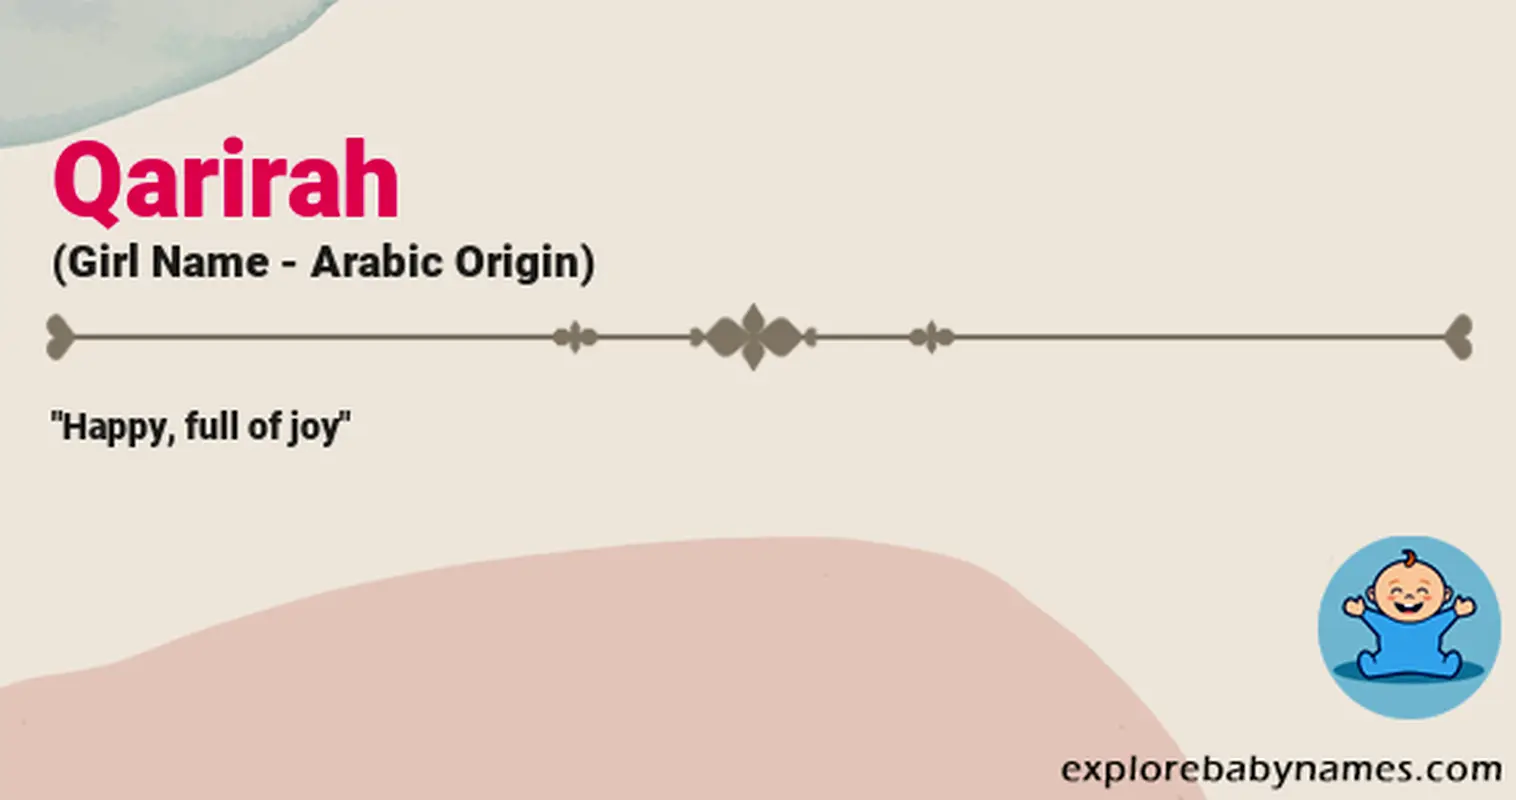 Meaning of Qarirah